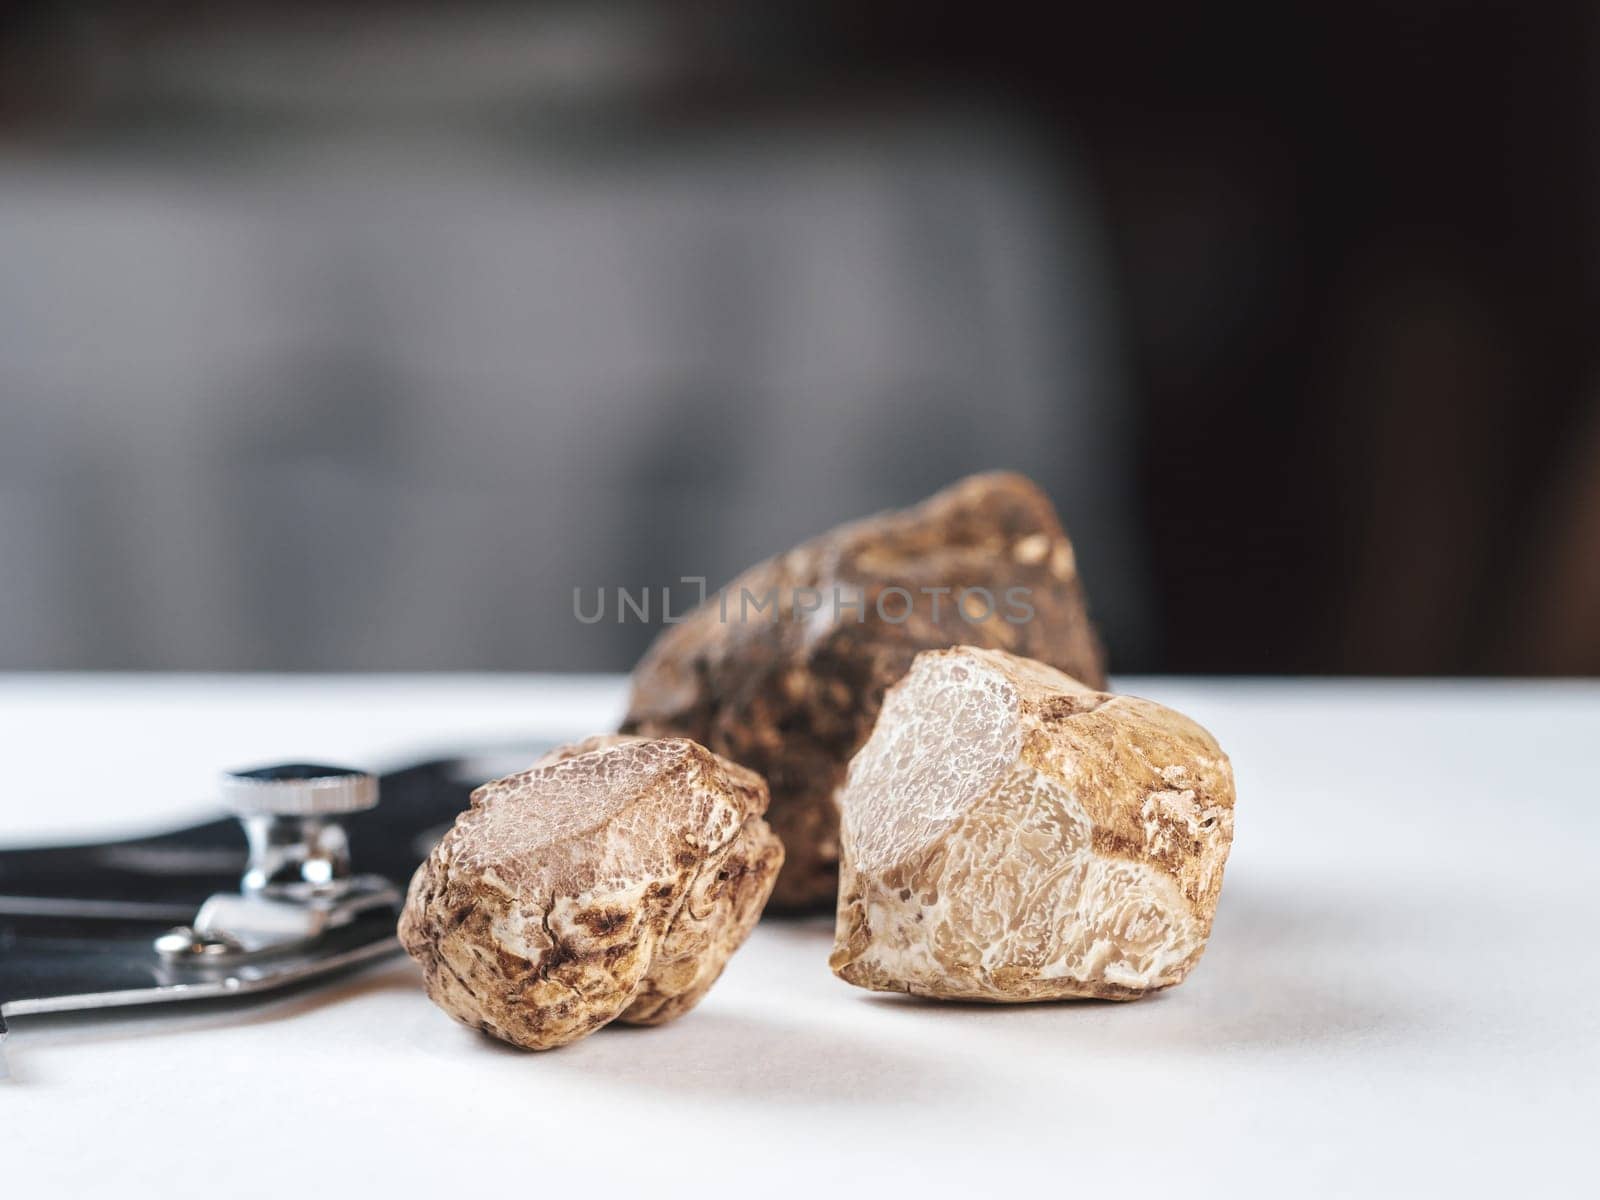 Black truffles gourmet mushrooms by fascinadora